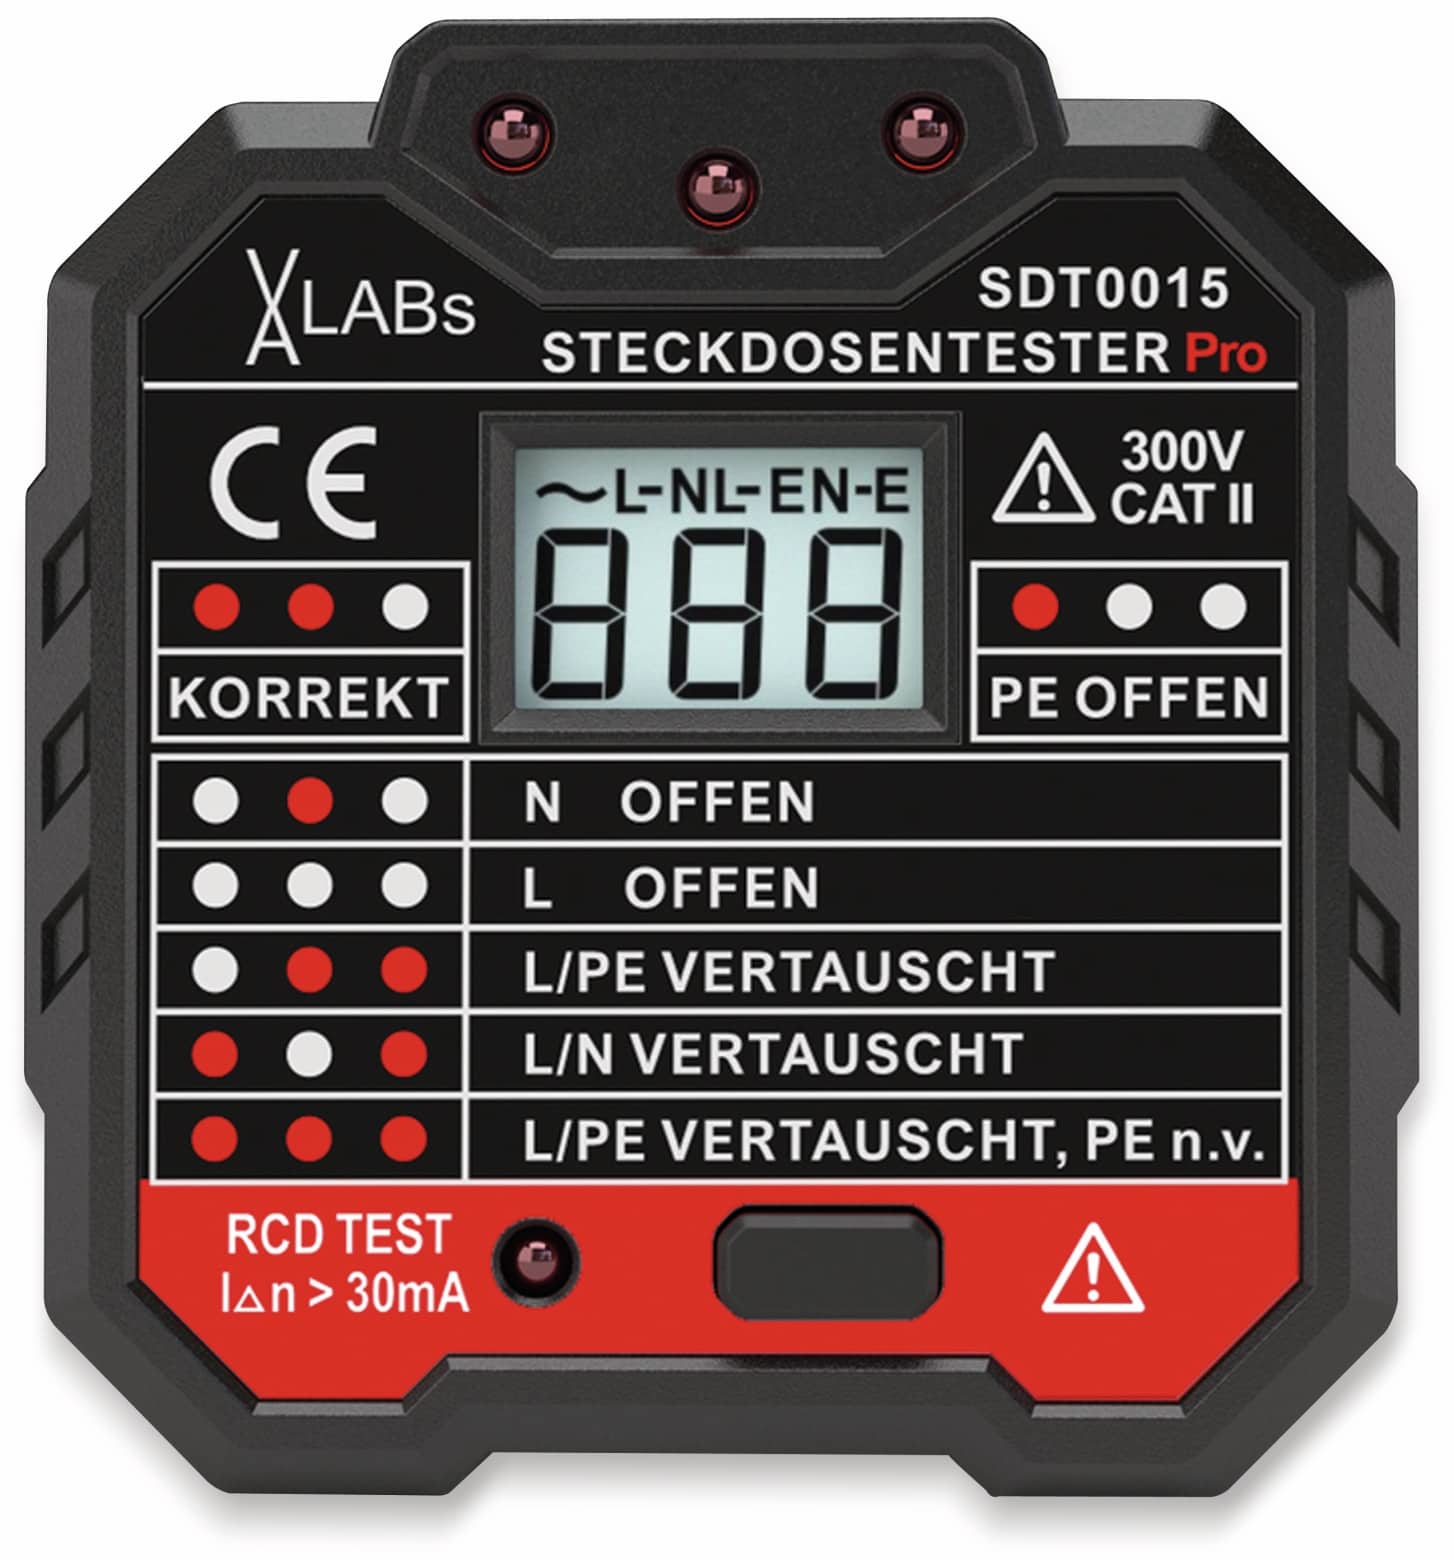 VA LABS SDT0015: Steckdosentester mit RCD-Prüfung und LCD